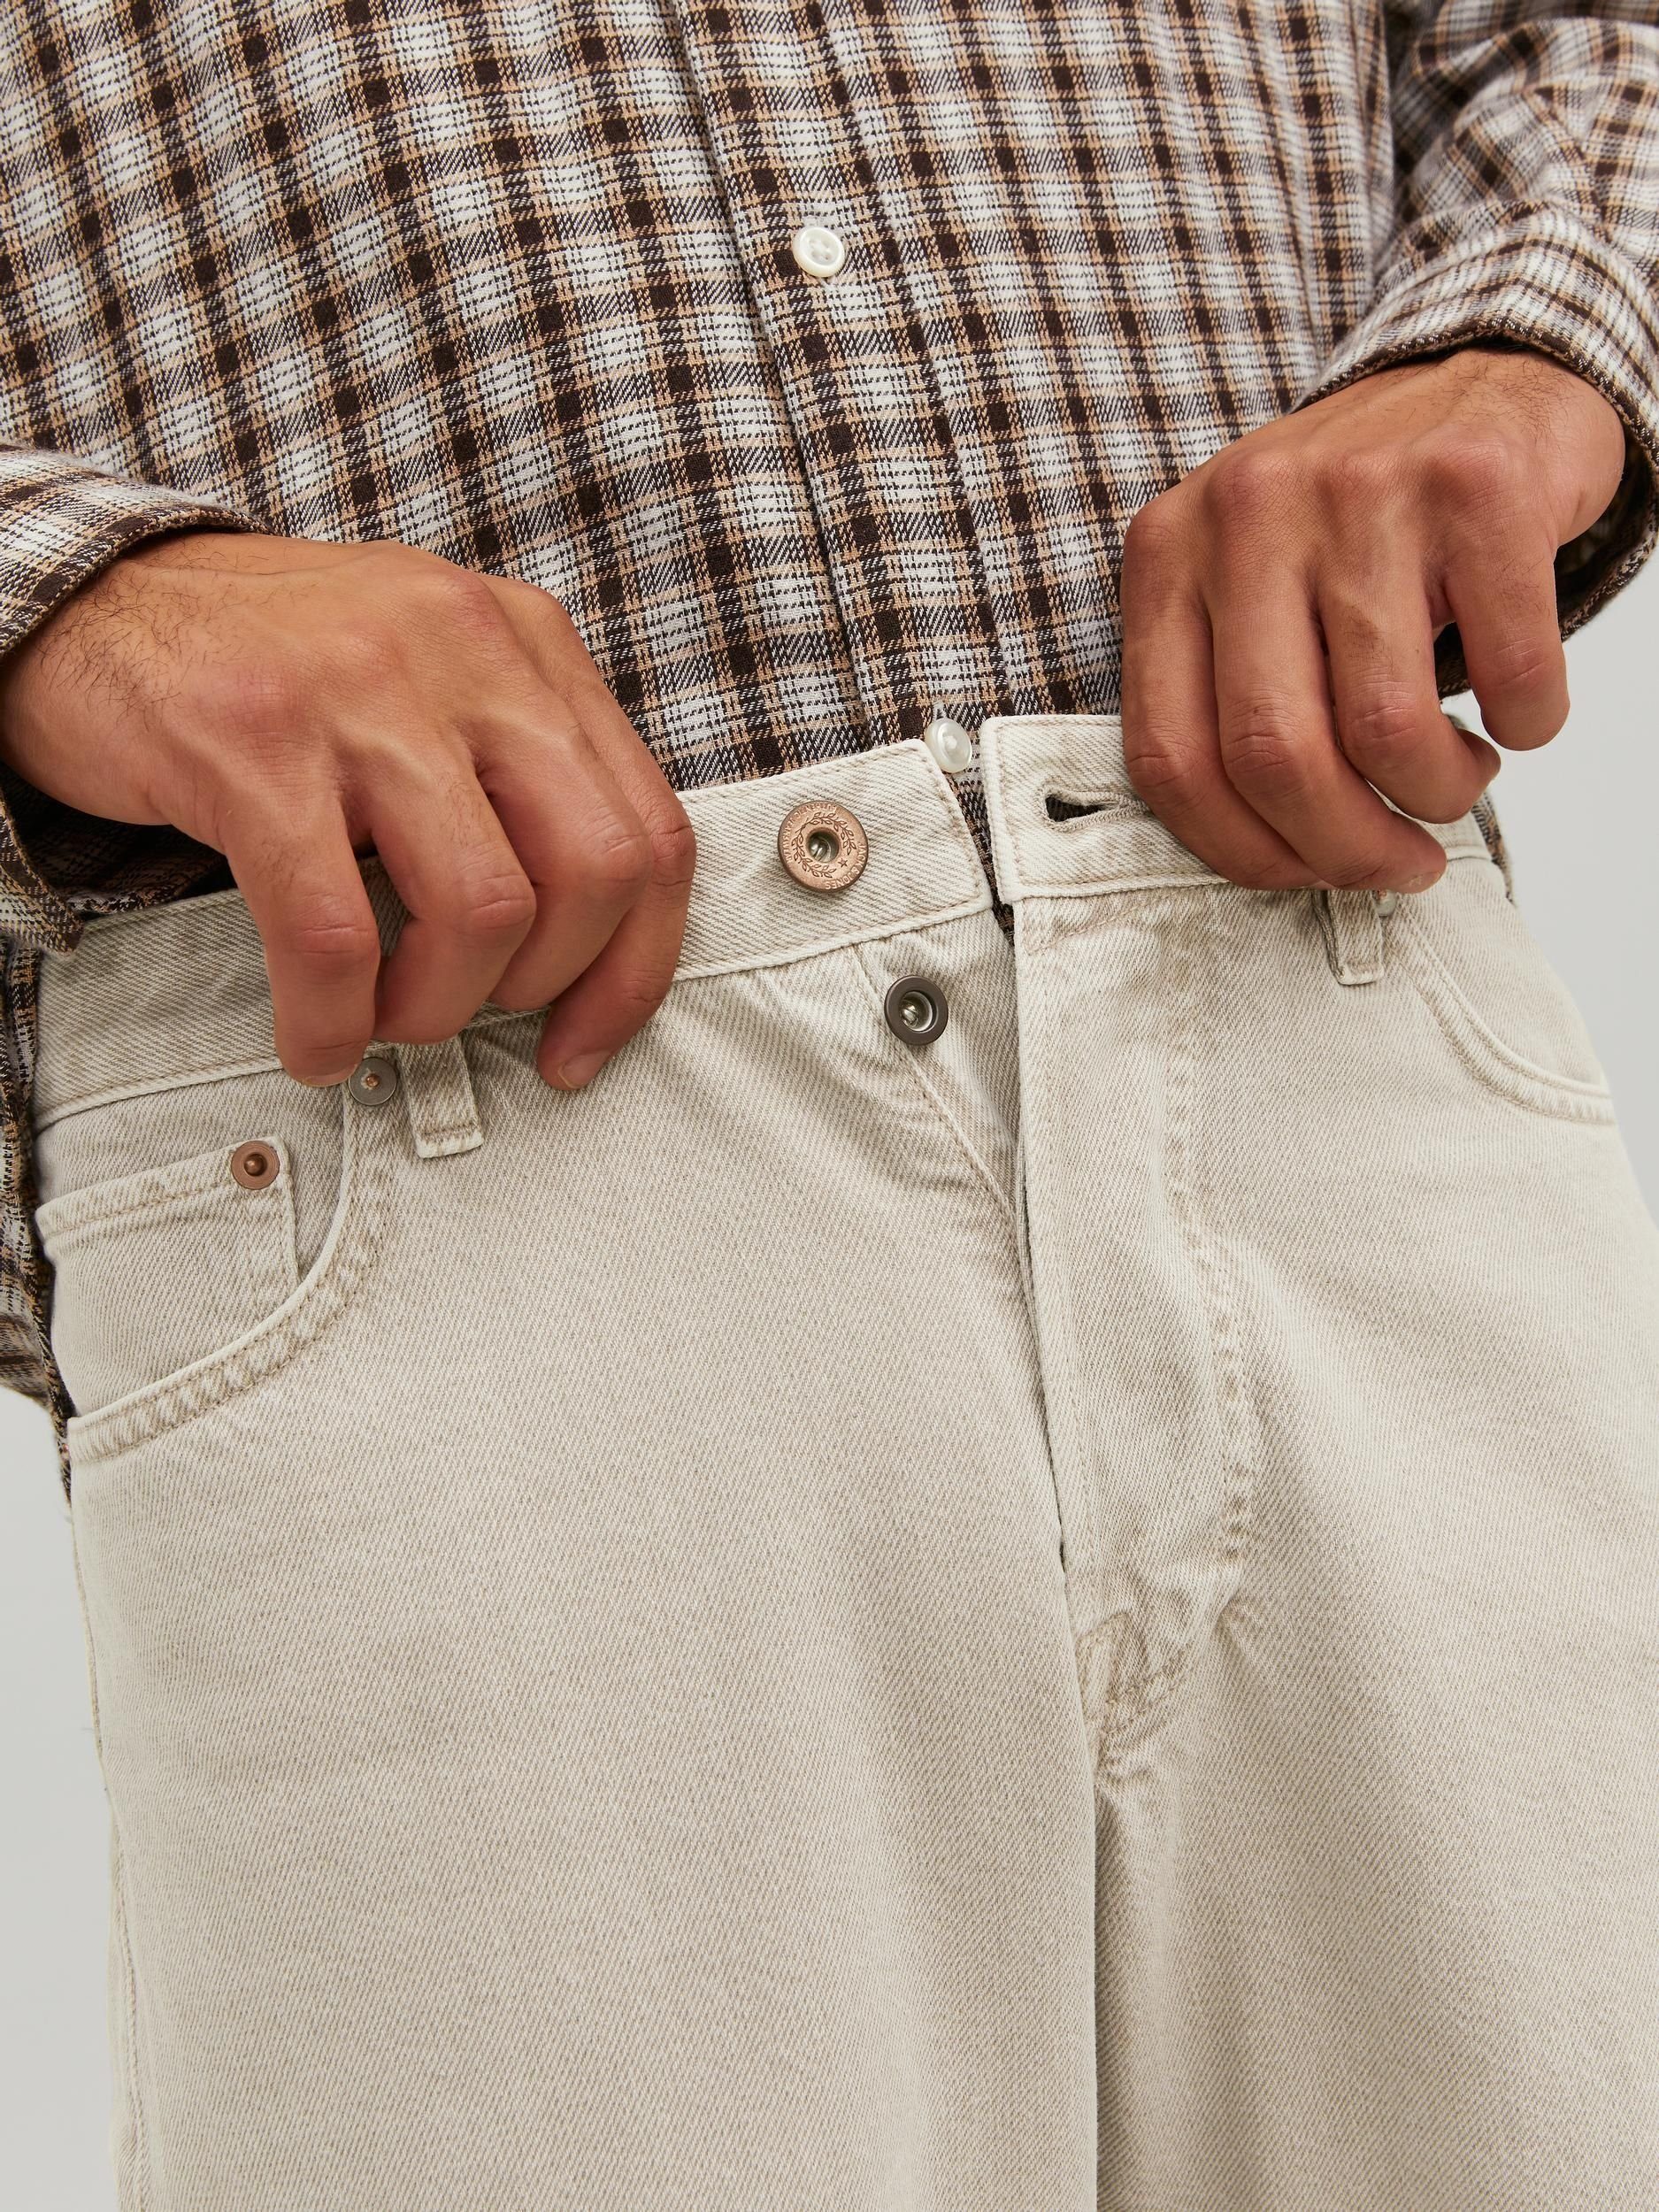 & 5-Pocket-Jeans Jones Jack